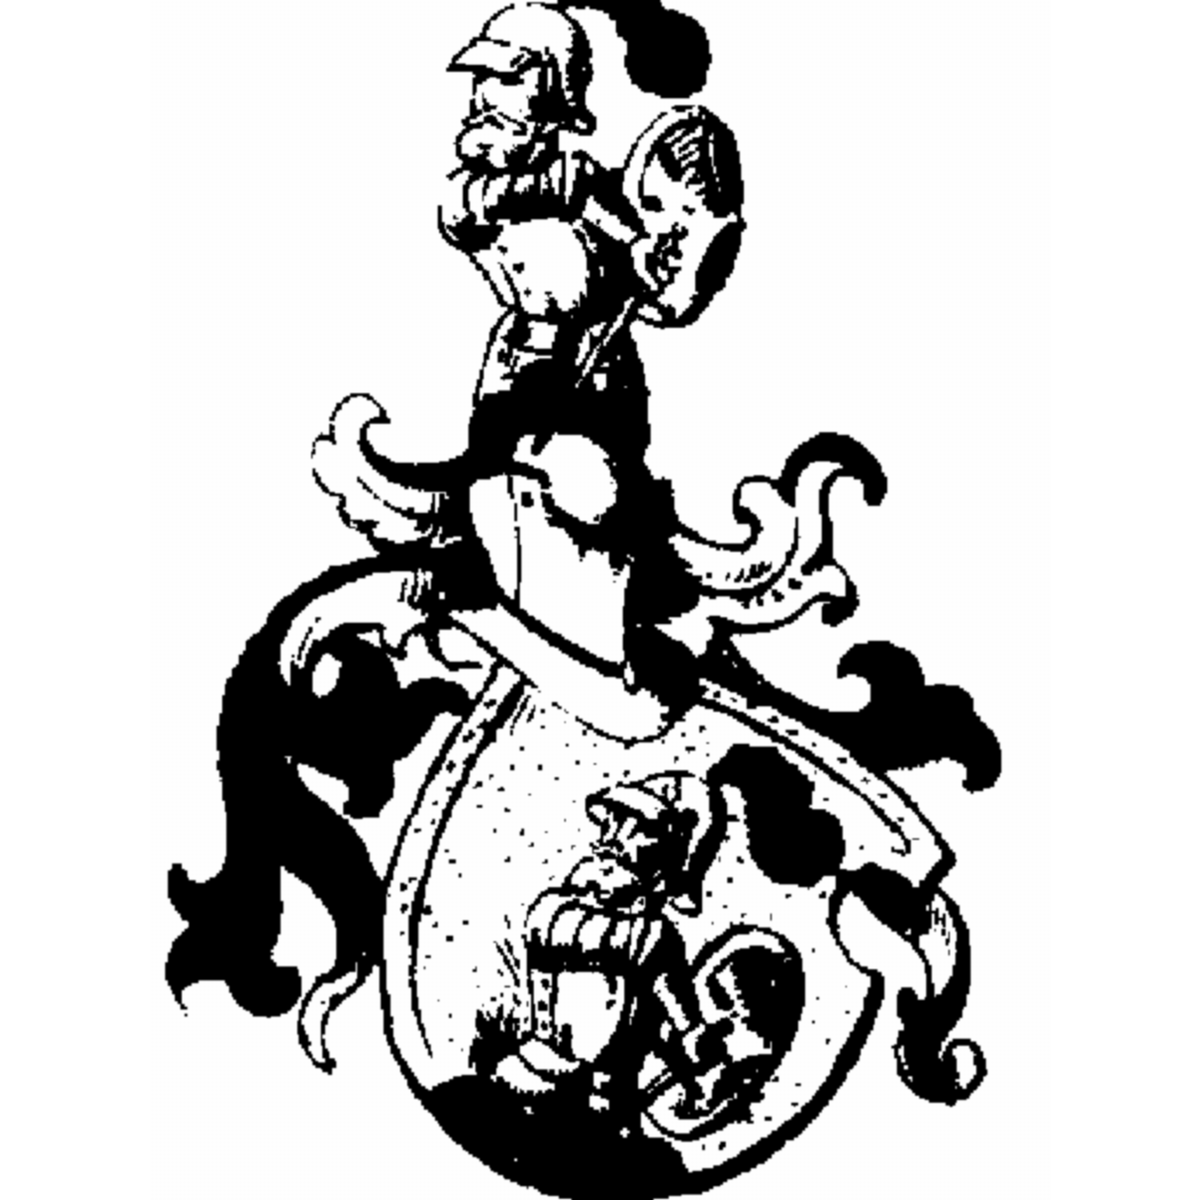 Wappen der Familie Pflüger